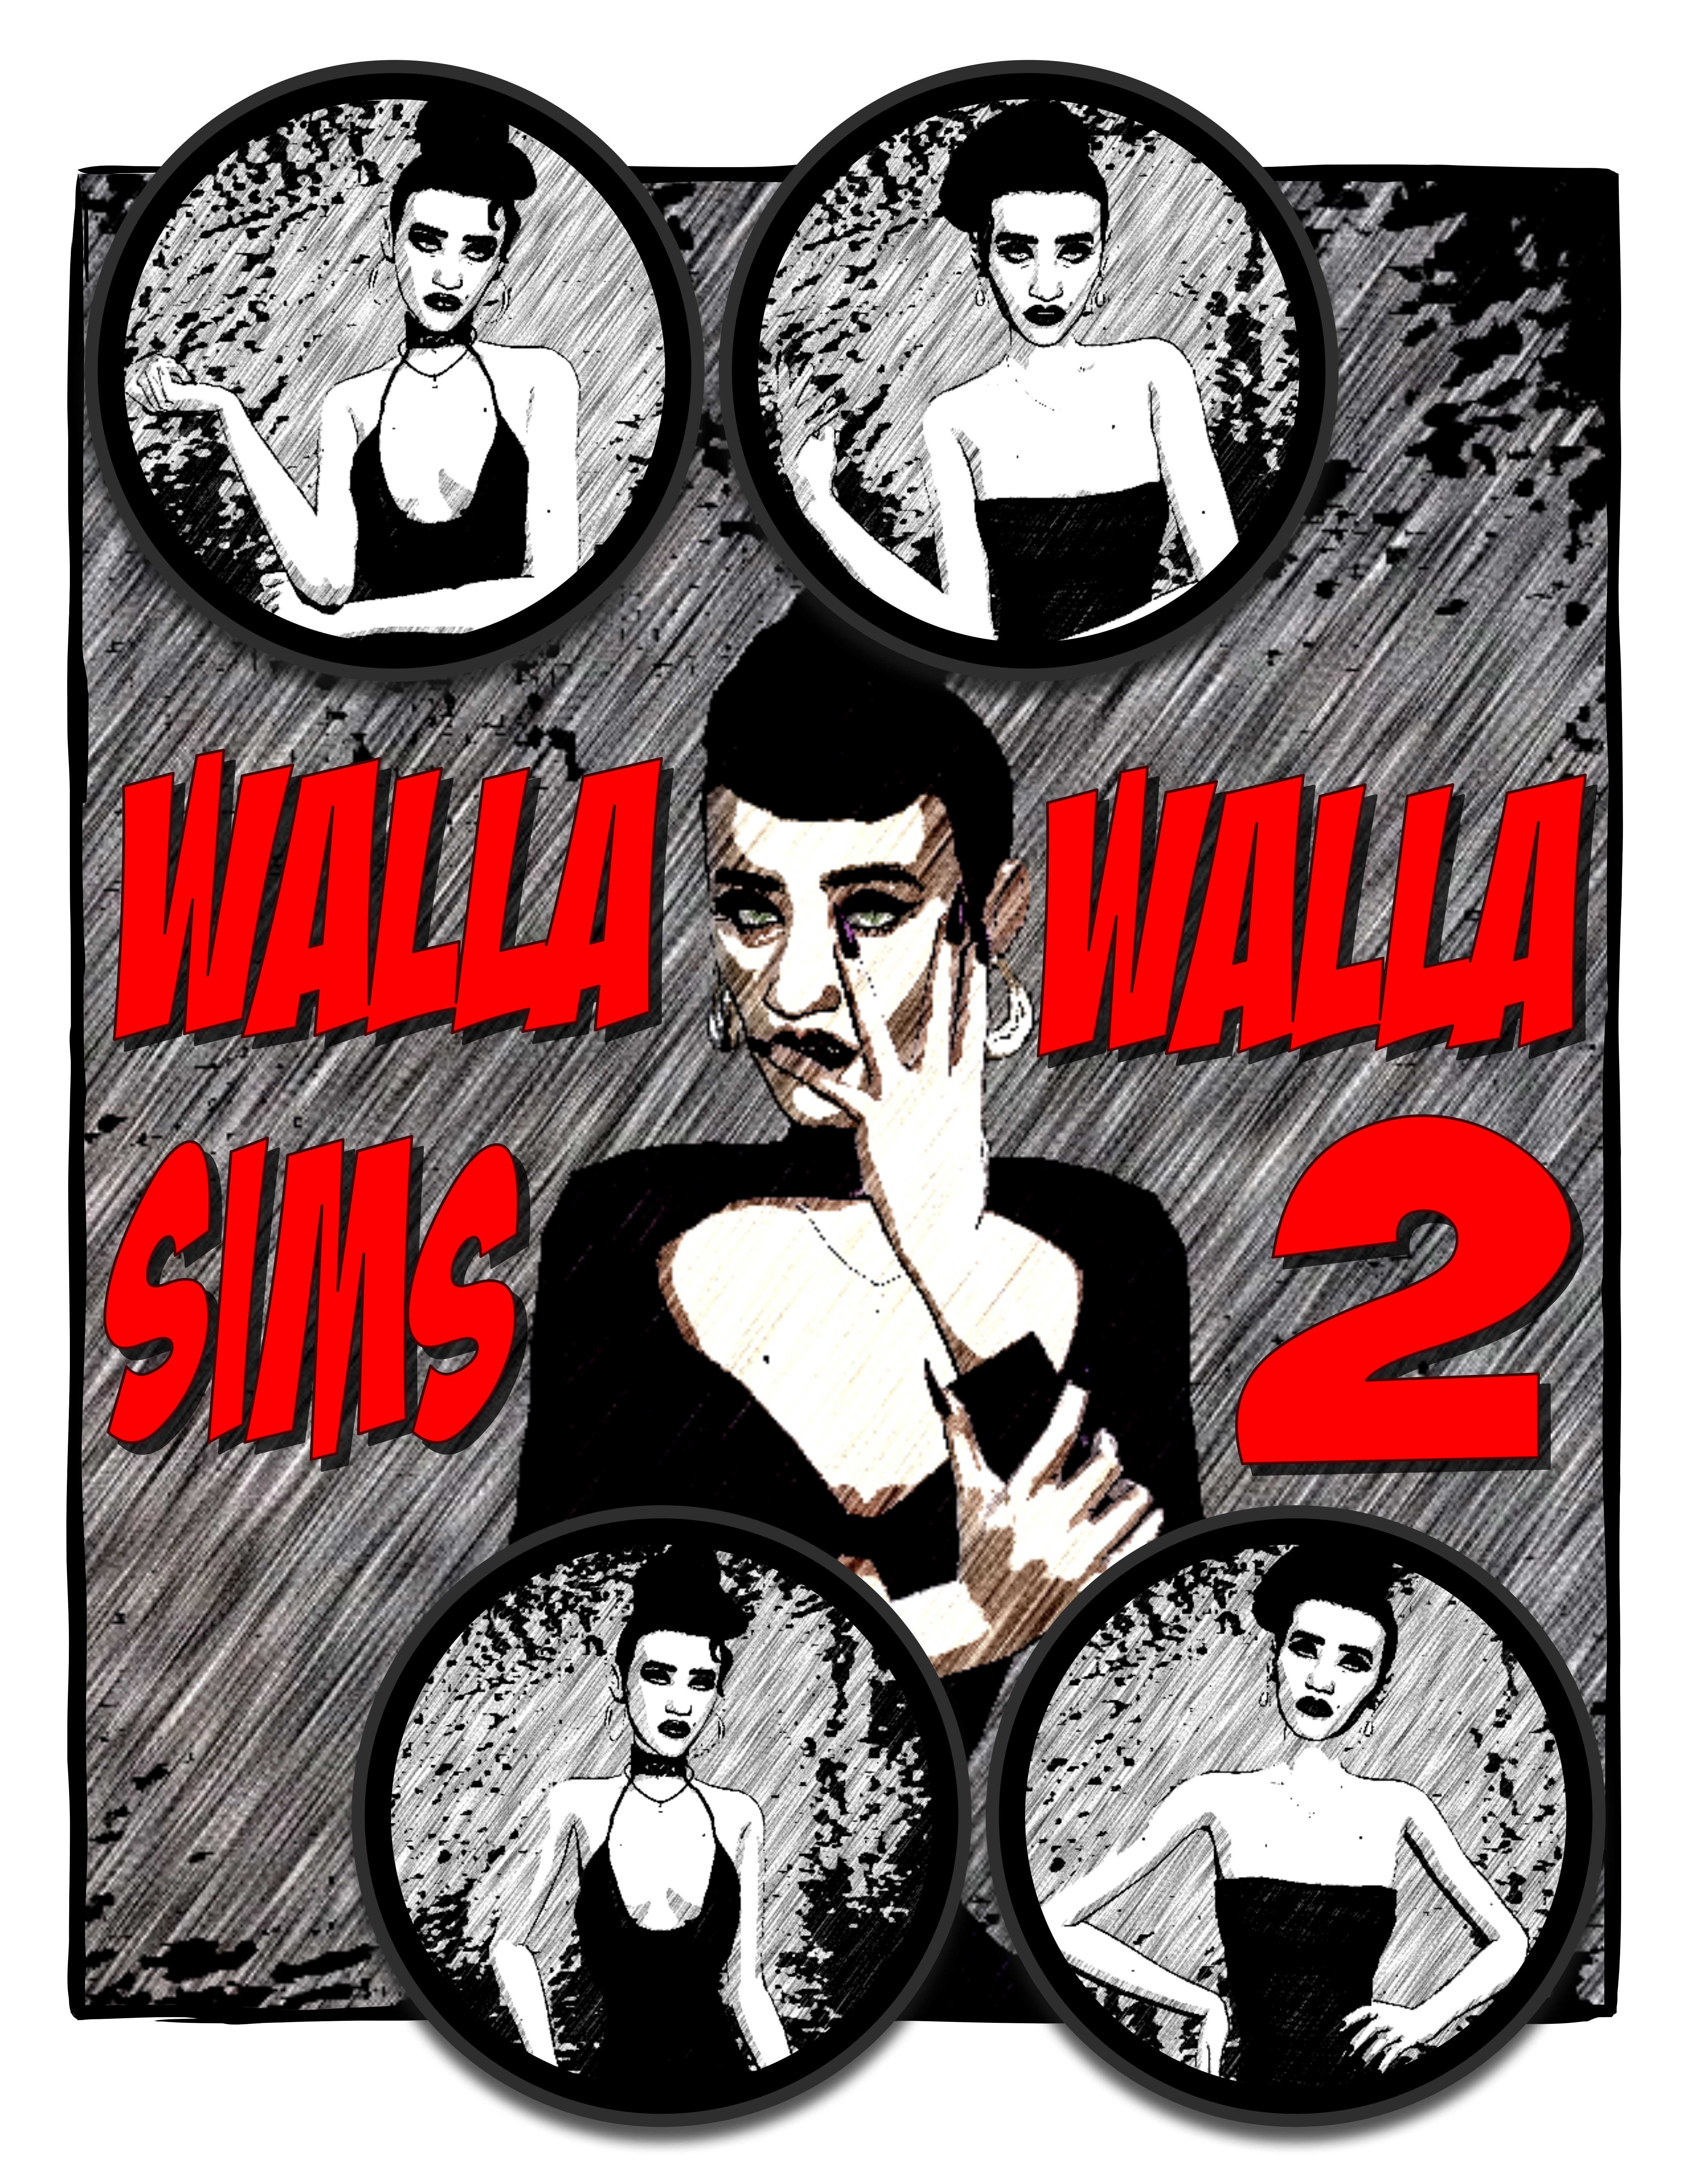 Walla Walla Sims 2